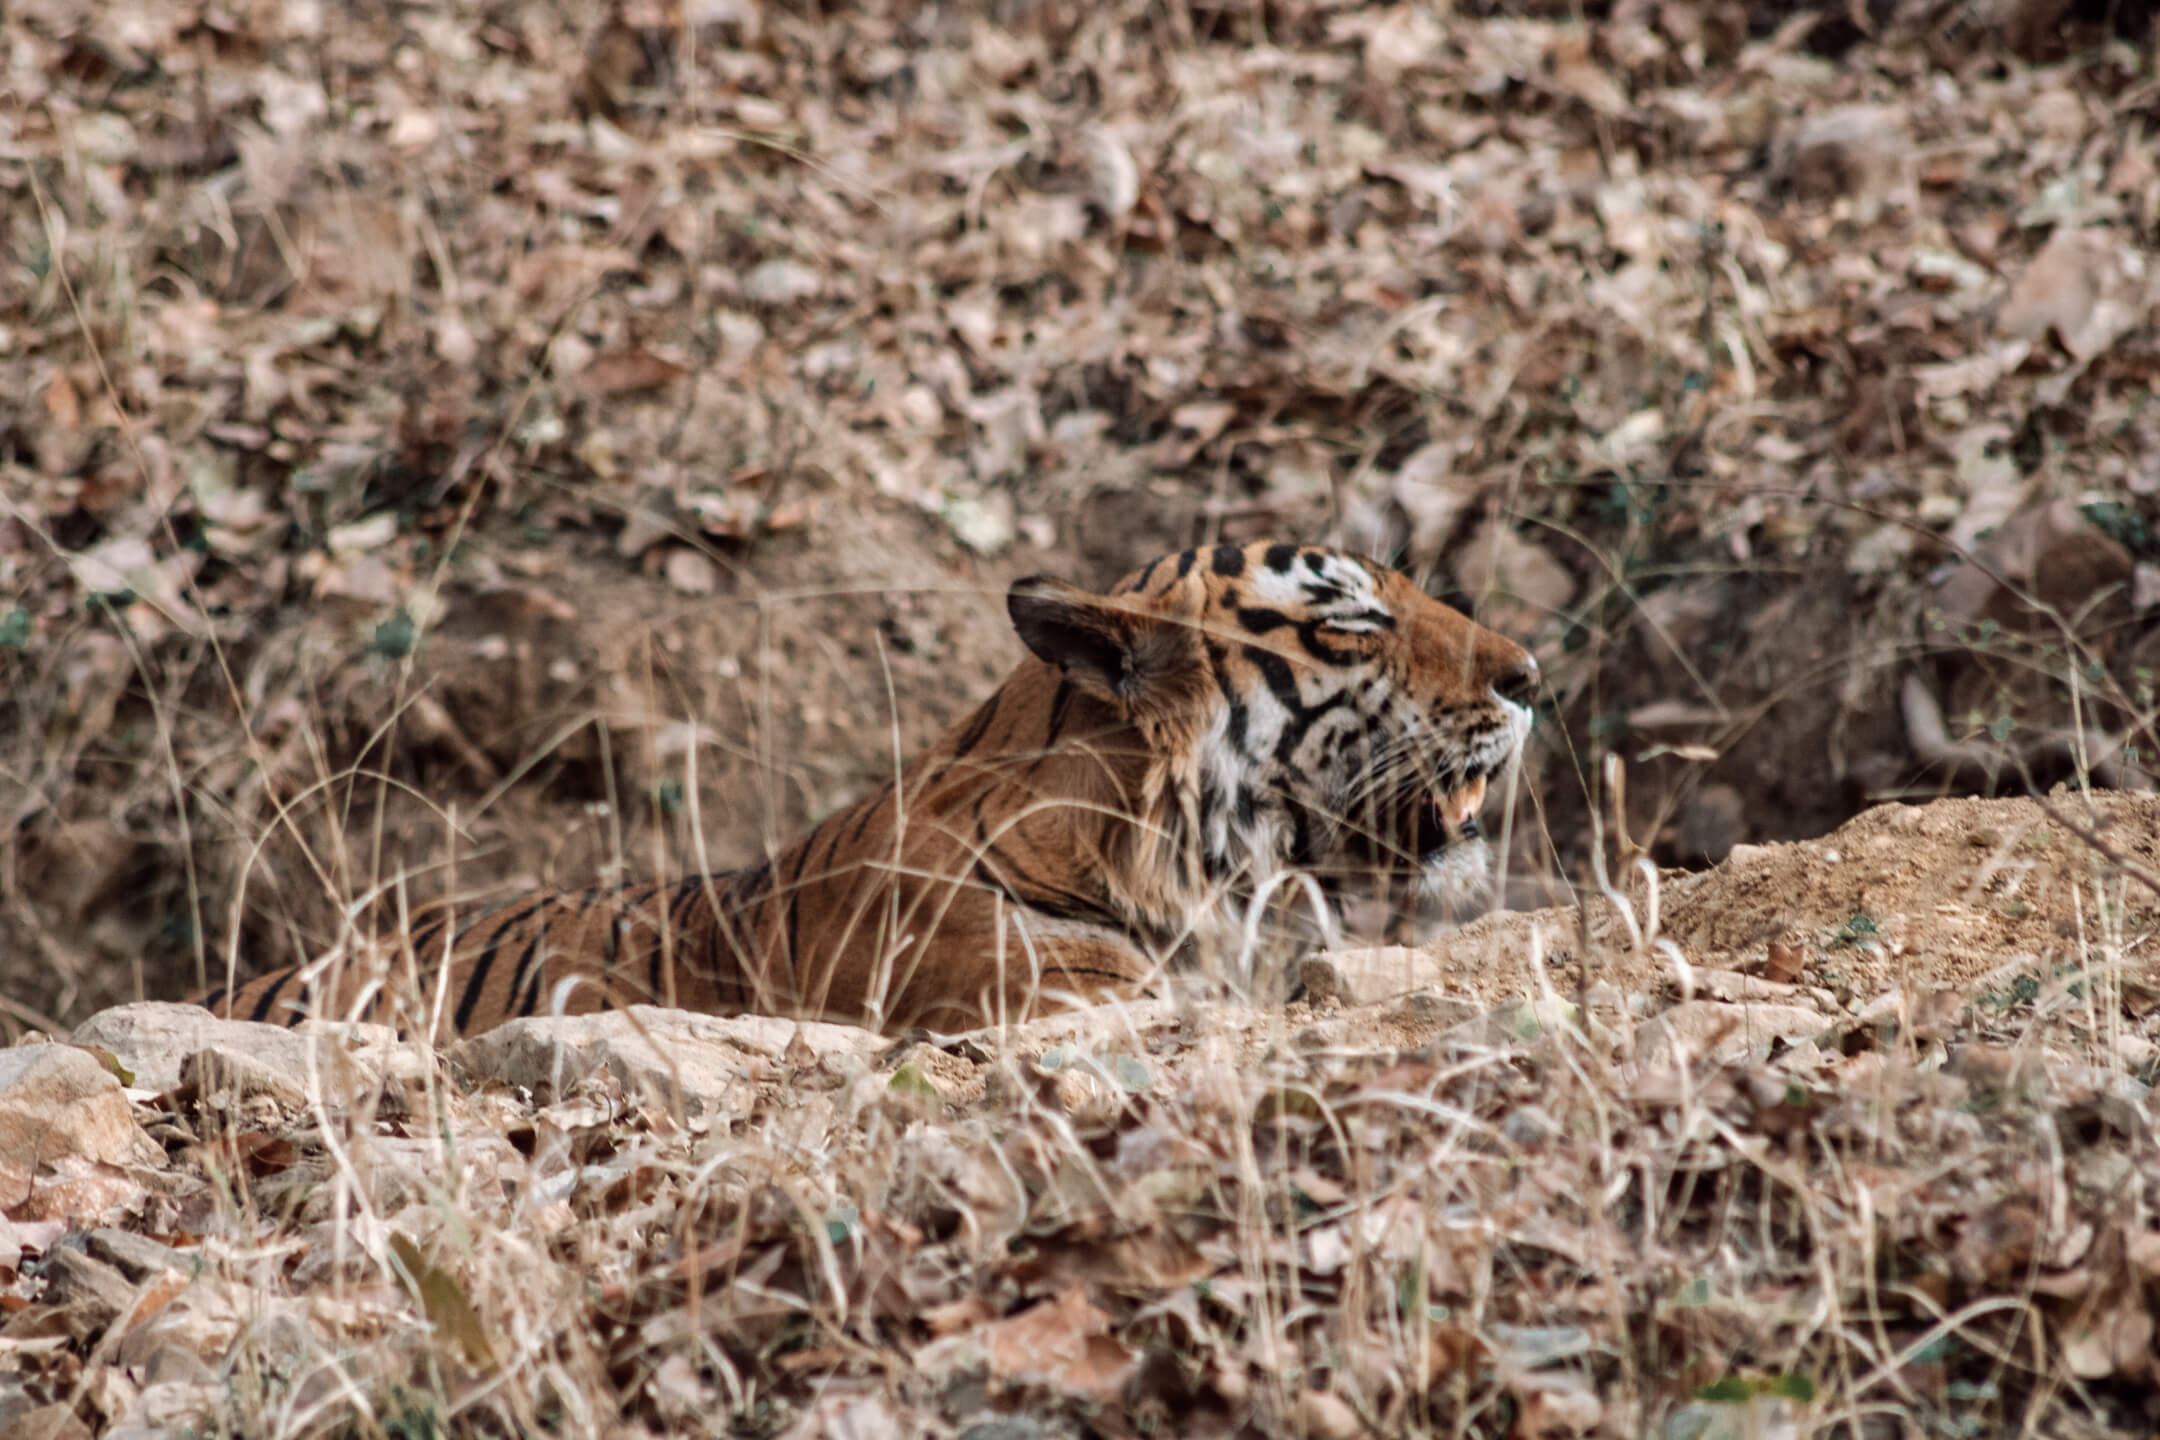 Royal Bengal Tiger we saw in Ranthambore National Park